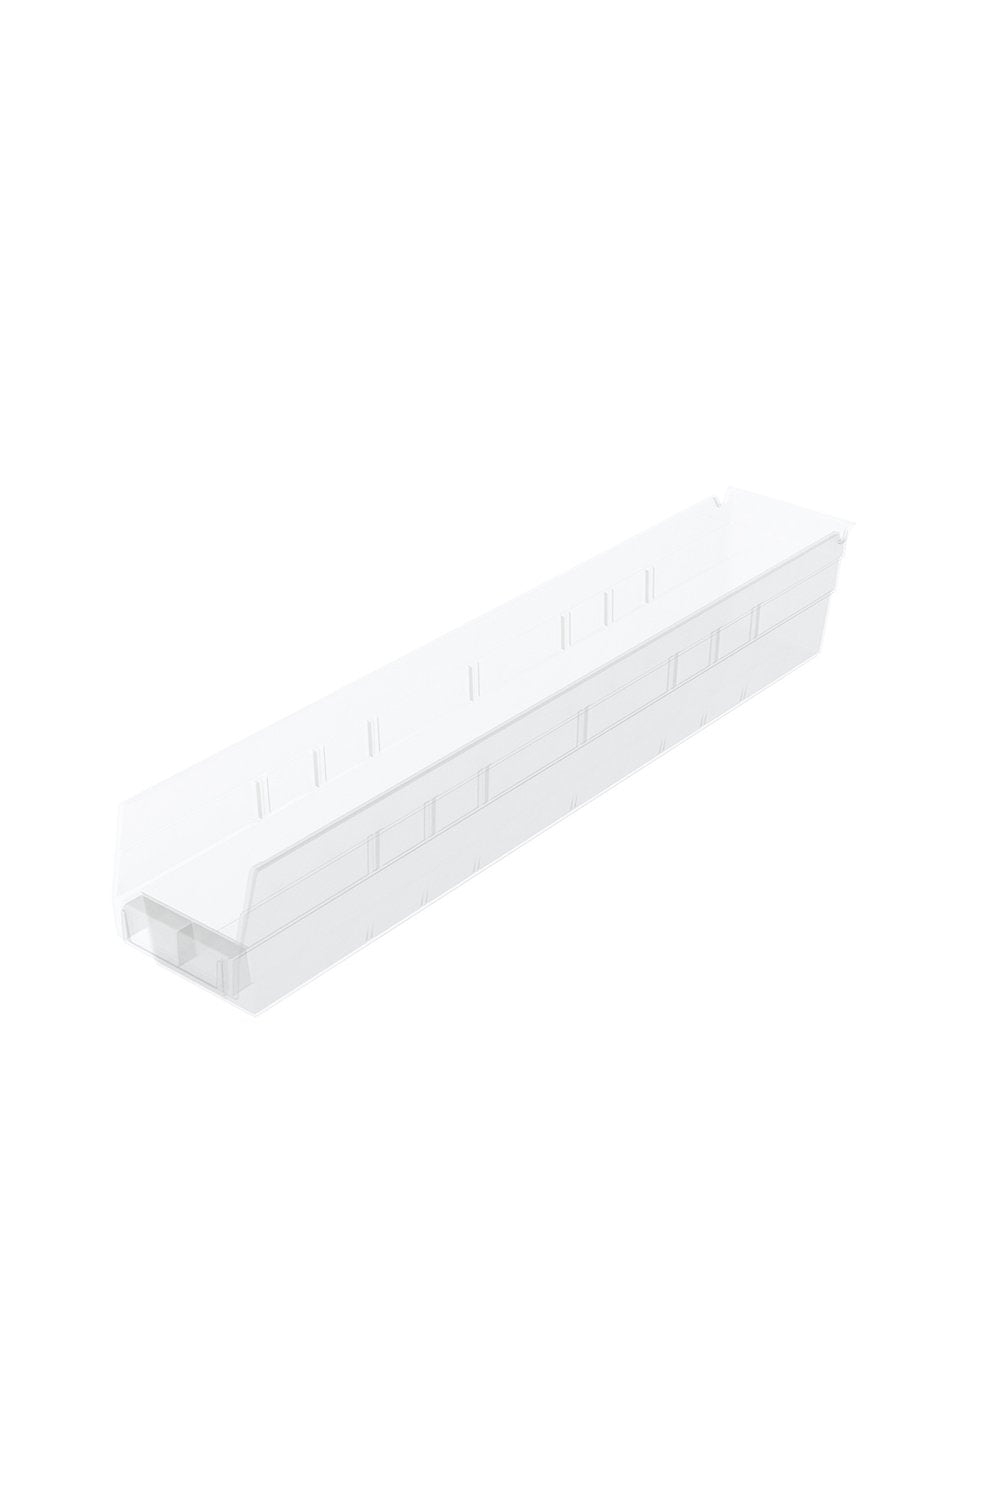 Shelf Bin for 24"D Shelves Bins & Containers Acart 23-5/8'' x 4-1/8'' x 4'' Clear 